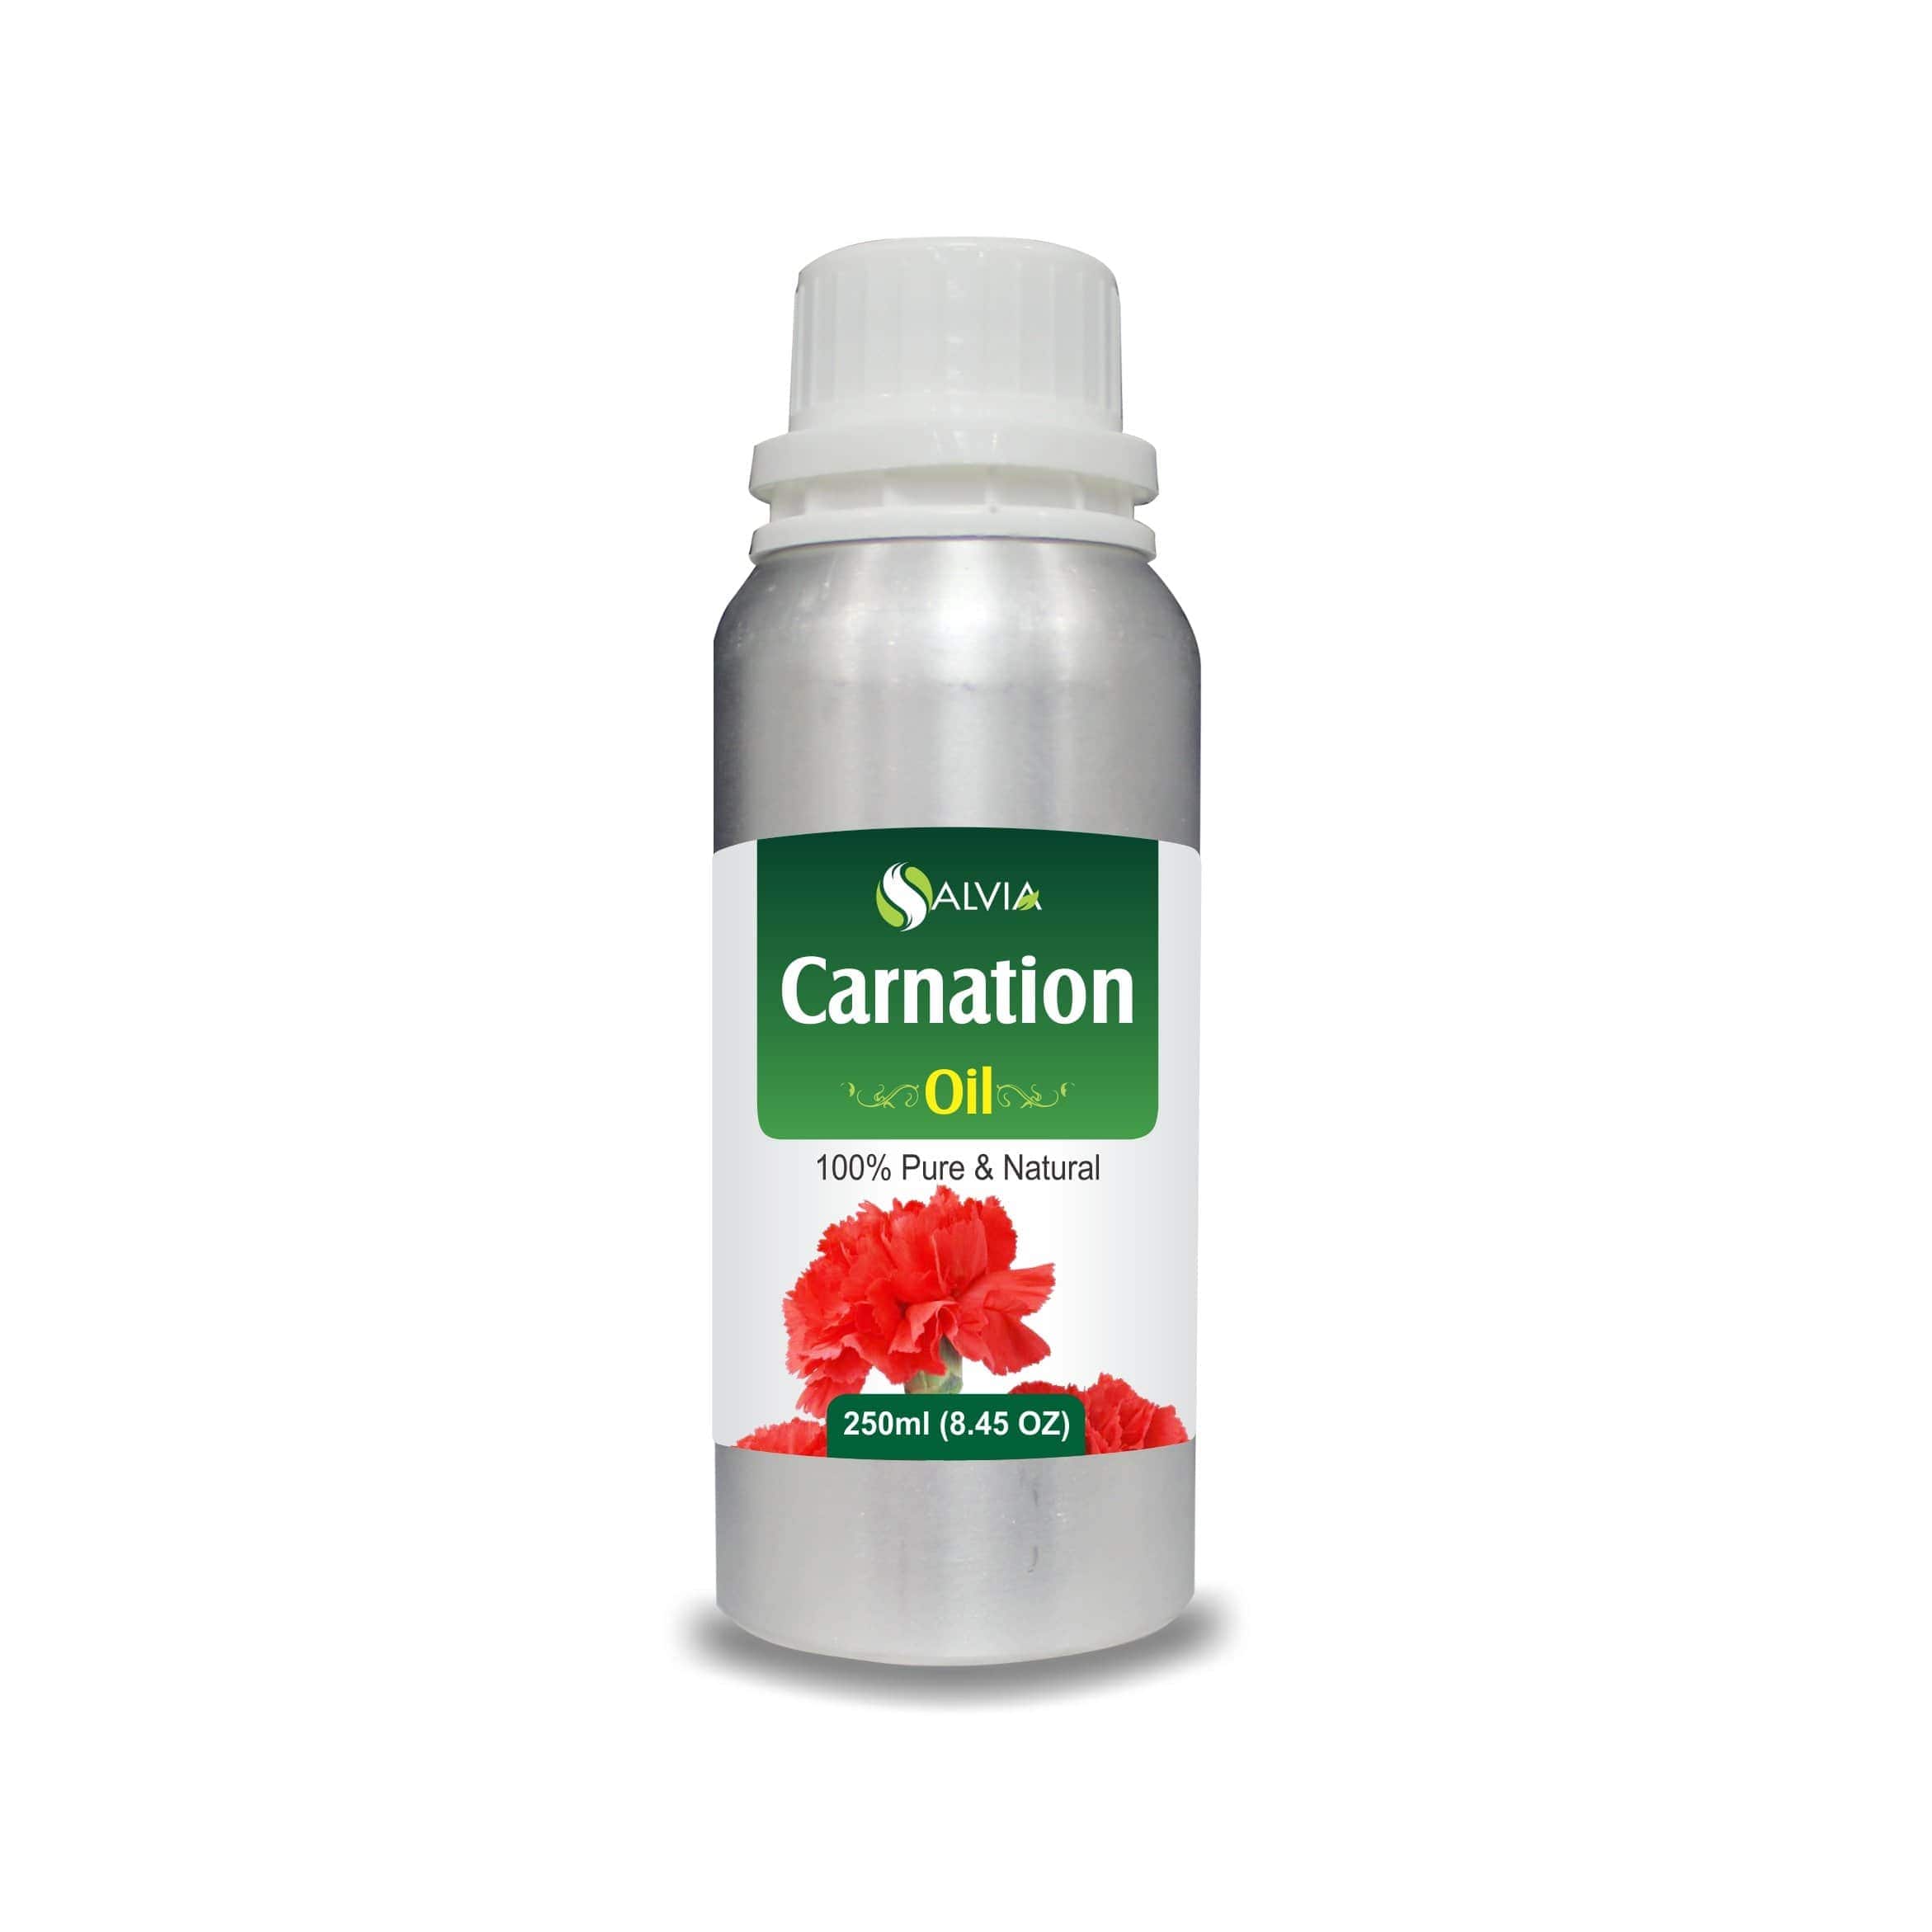 Carnation Oil benefits 